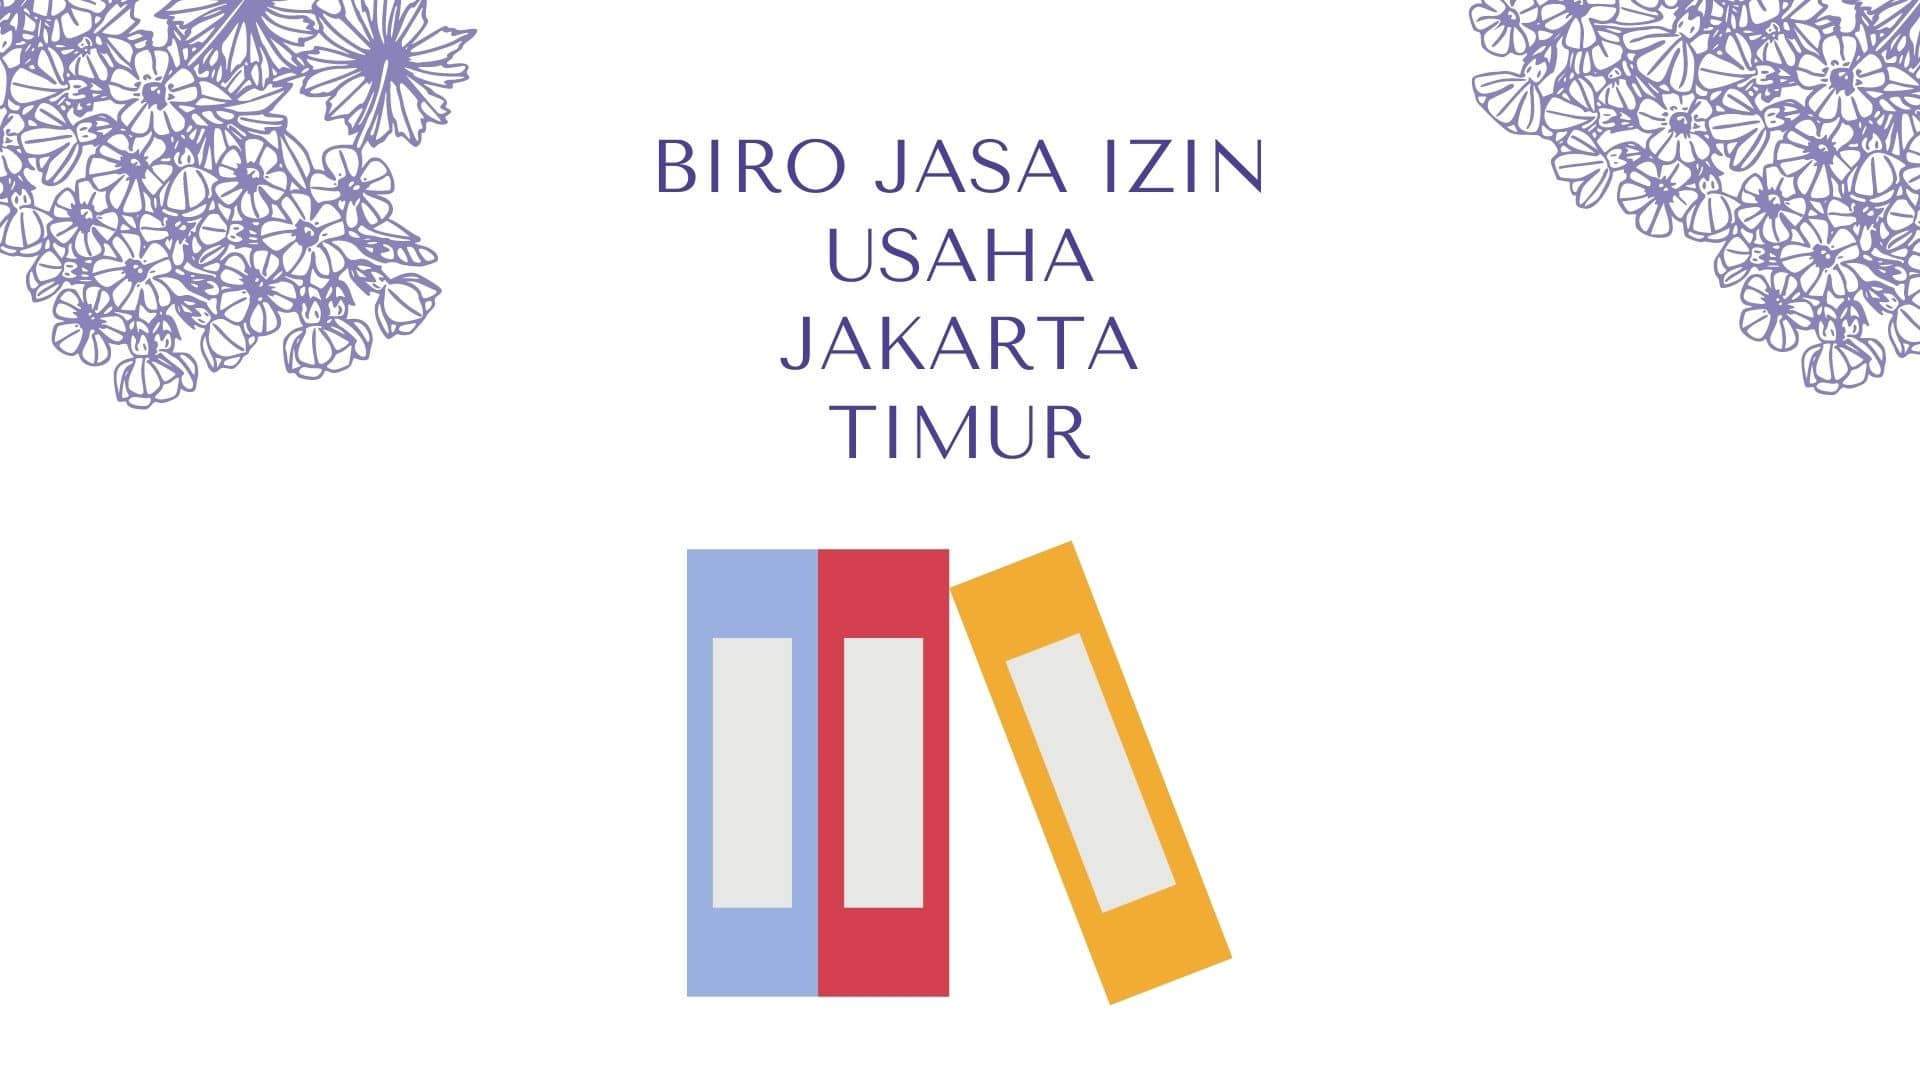 Biro Jasa Izin Usaha Jakarta Timur